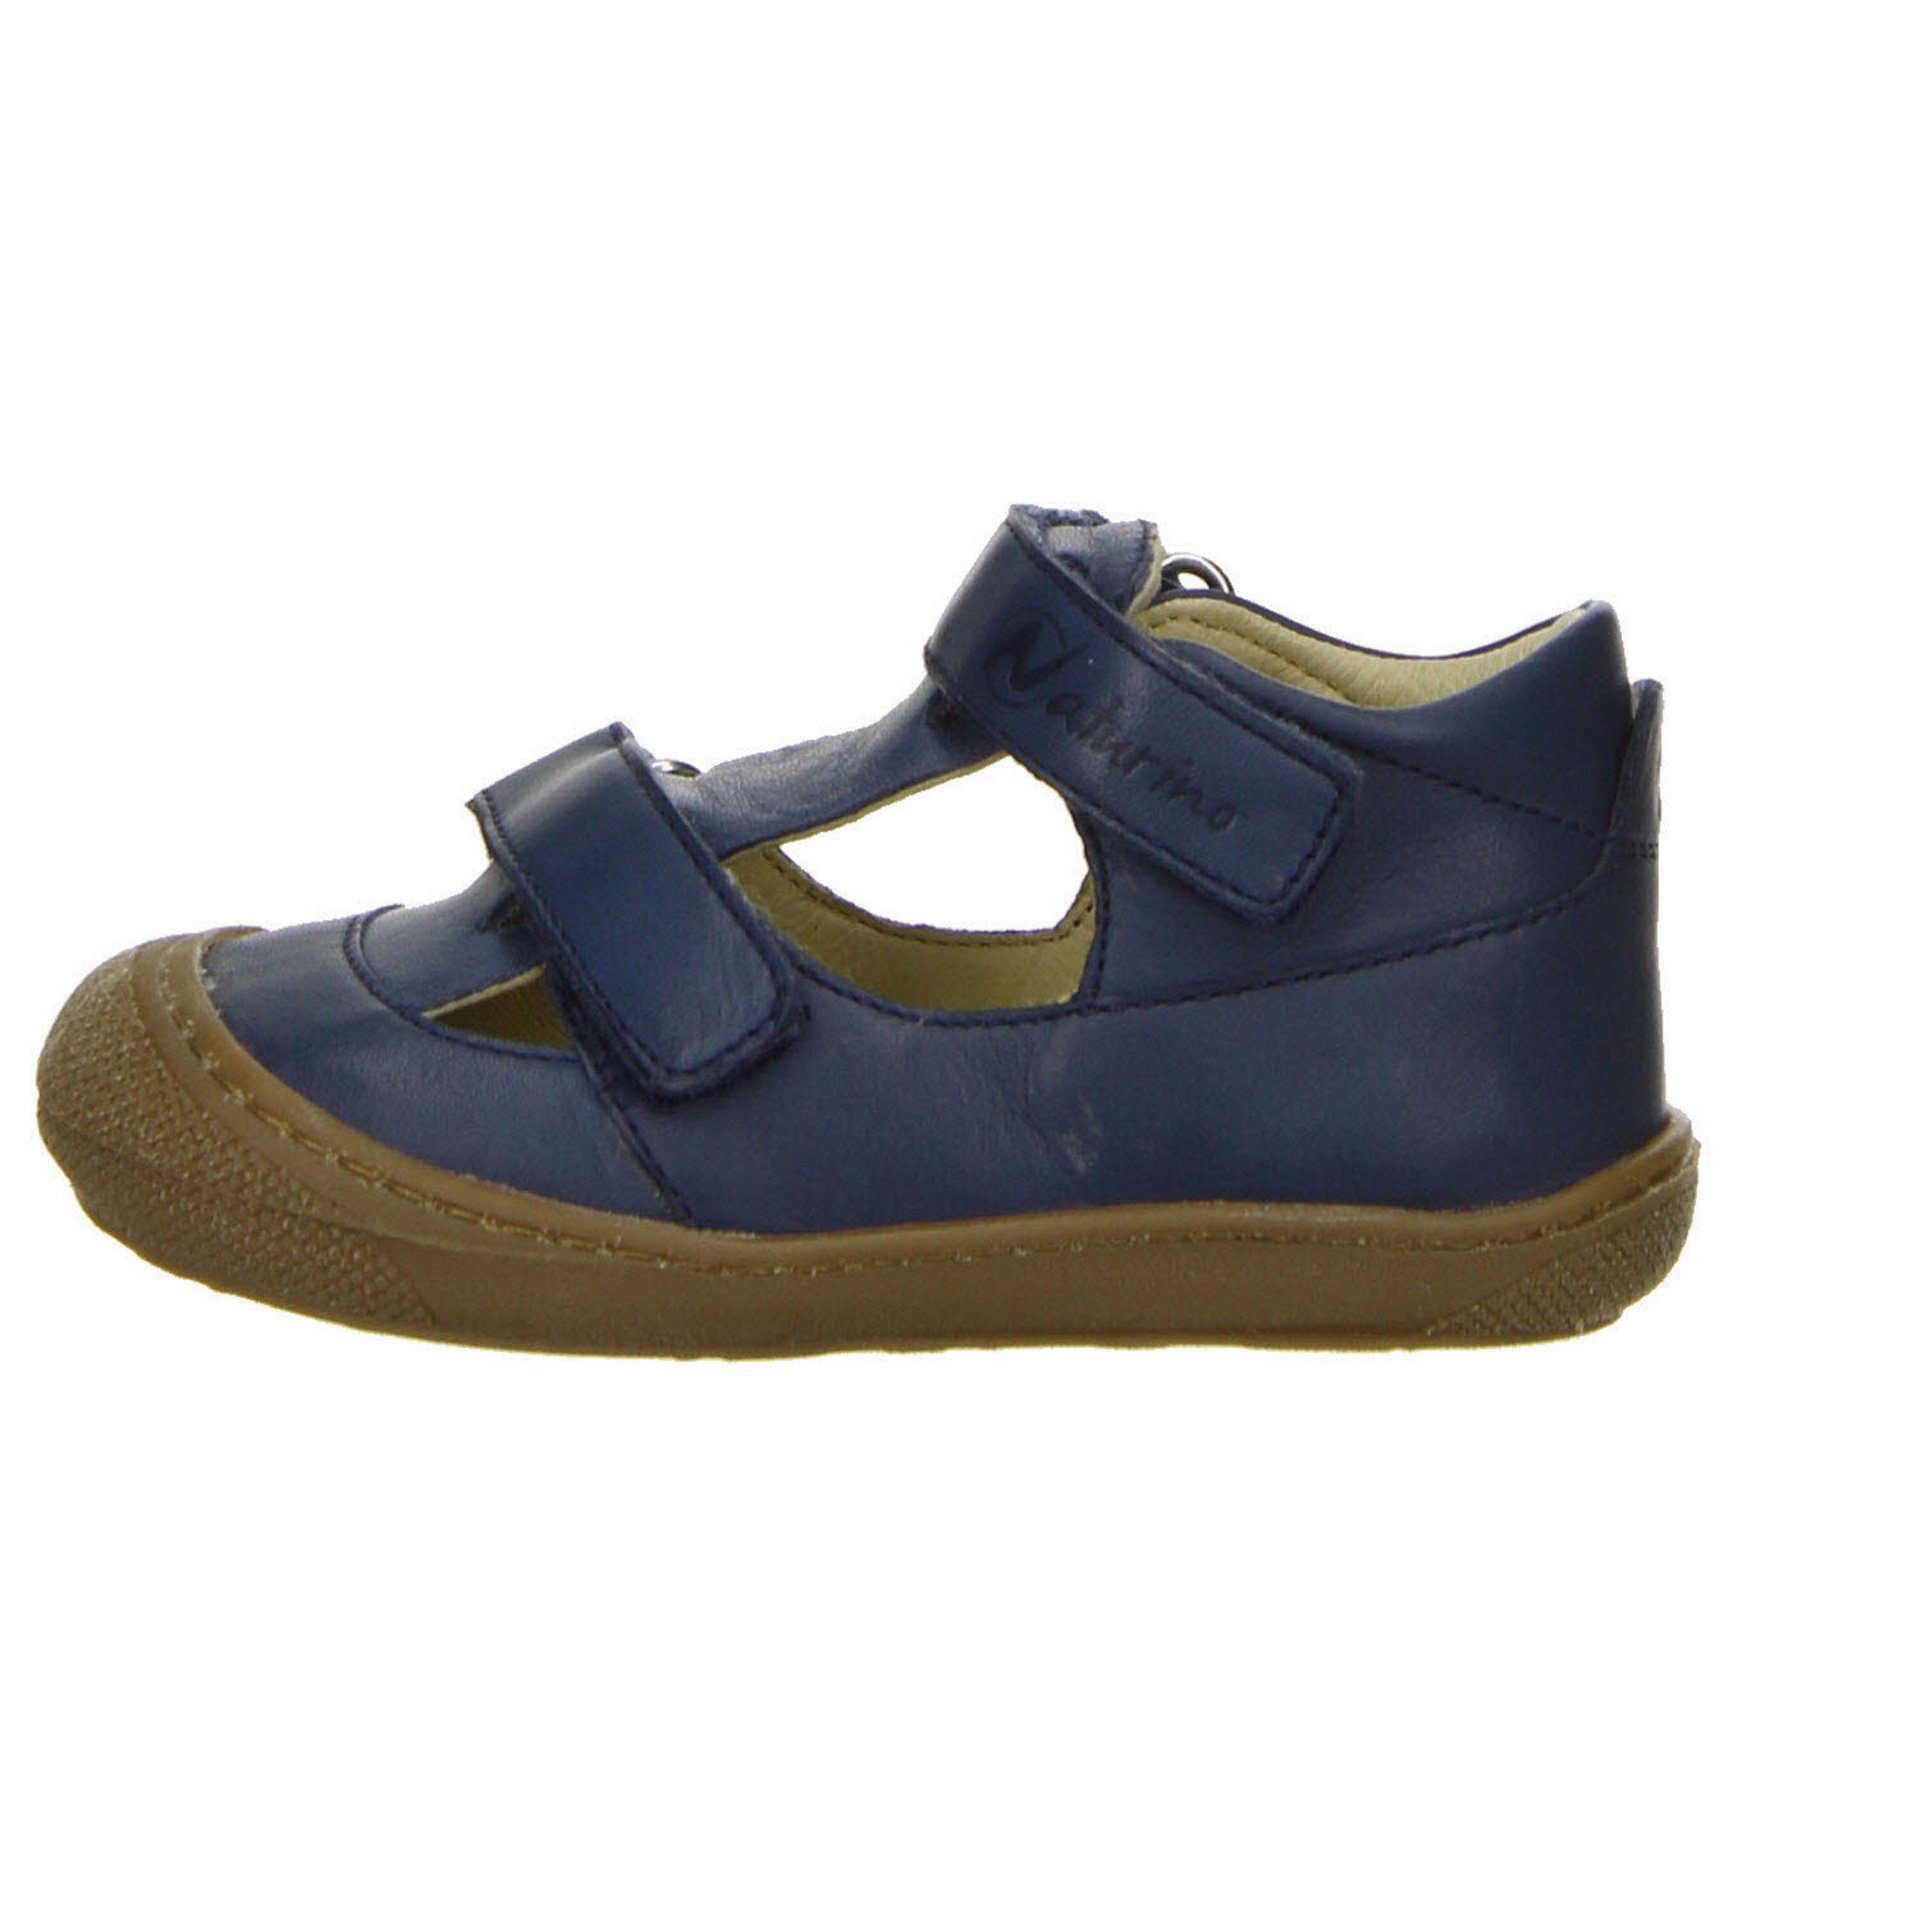 Minilette Schuhe dunkel Sandalen Glattleder Puffy Lauflernschuh blau Jungen Naturino